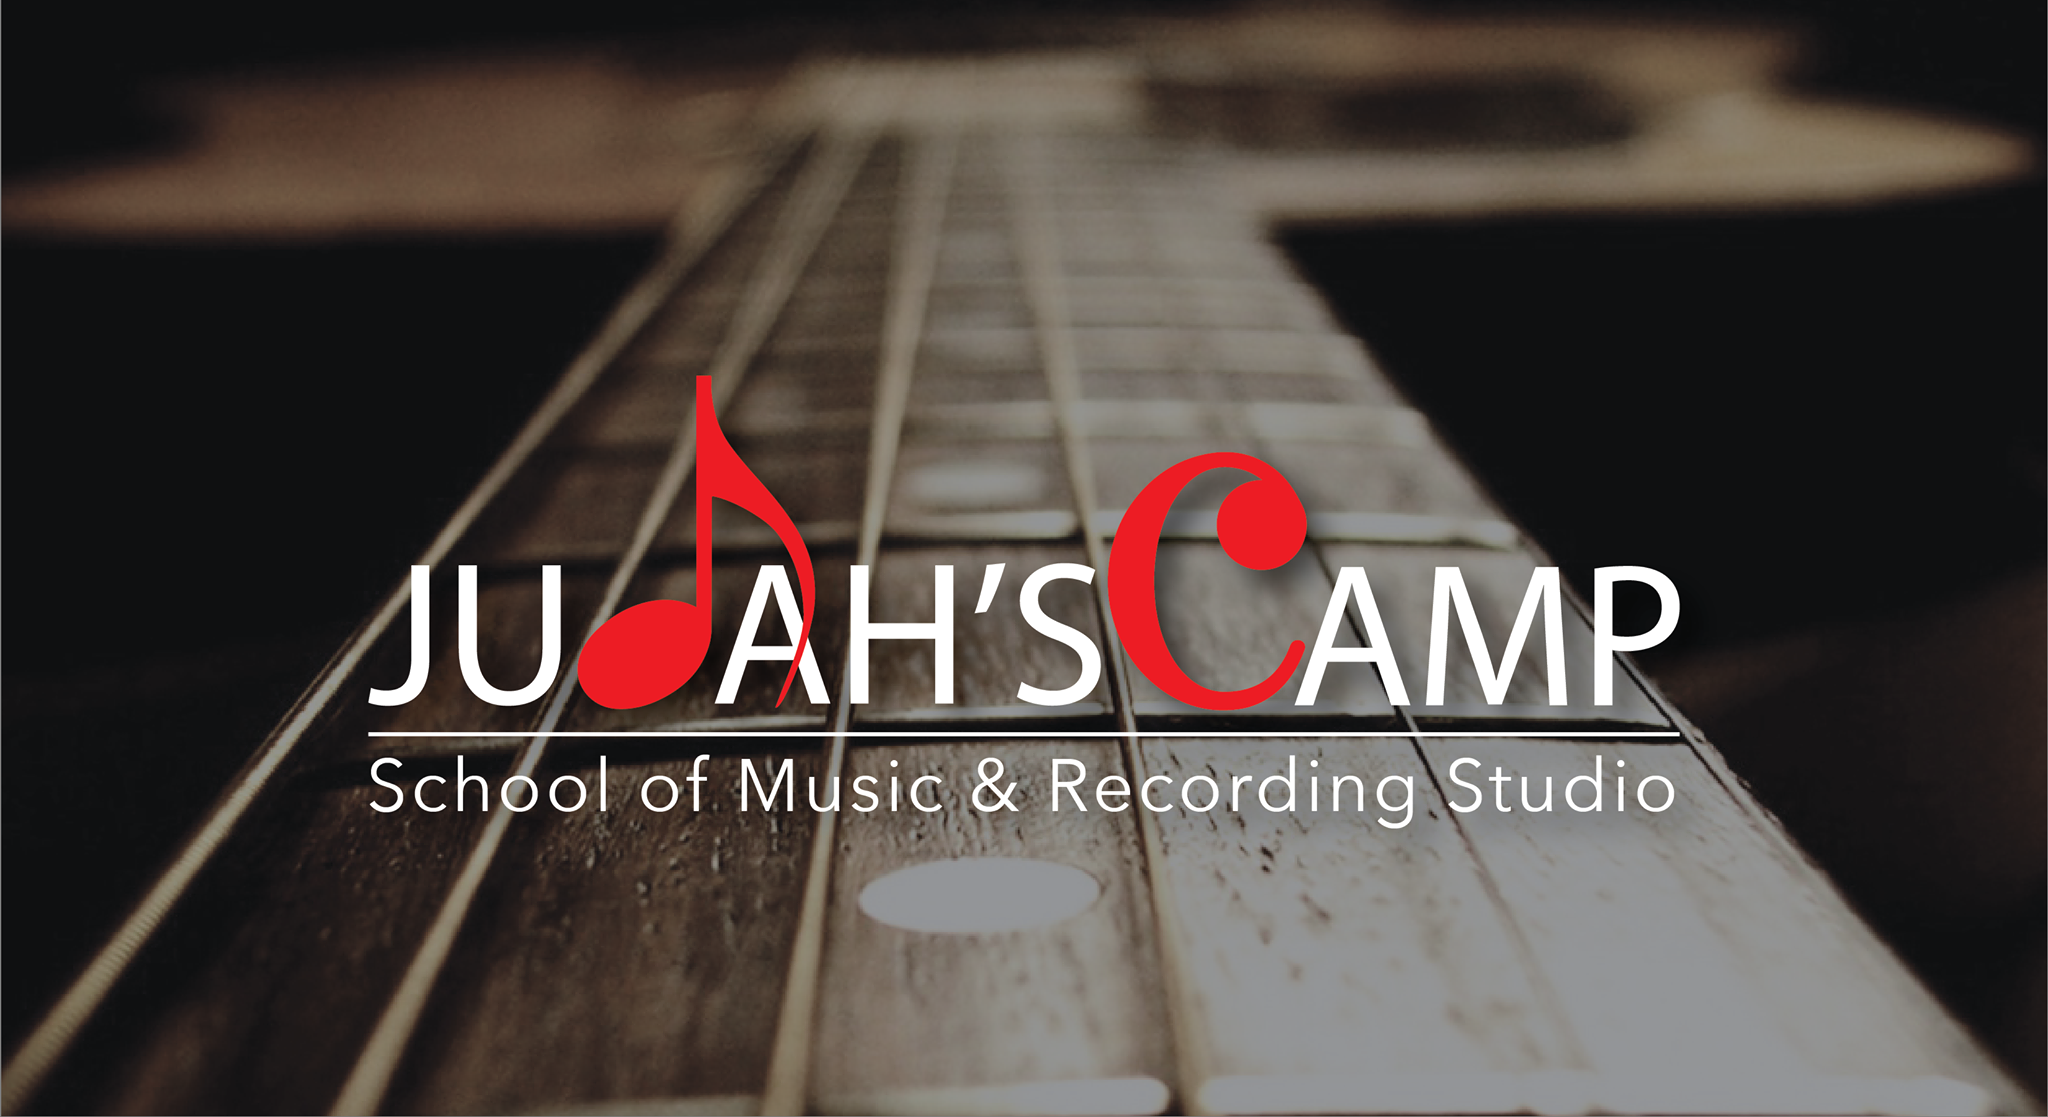 Judah's Camp School of Music & Recording Studio